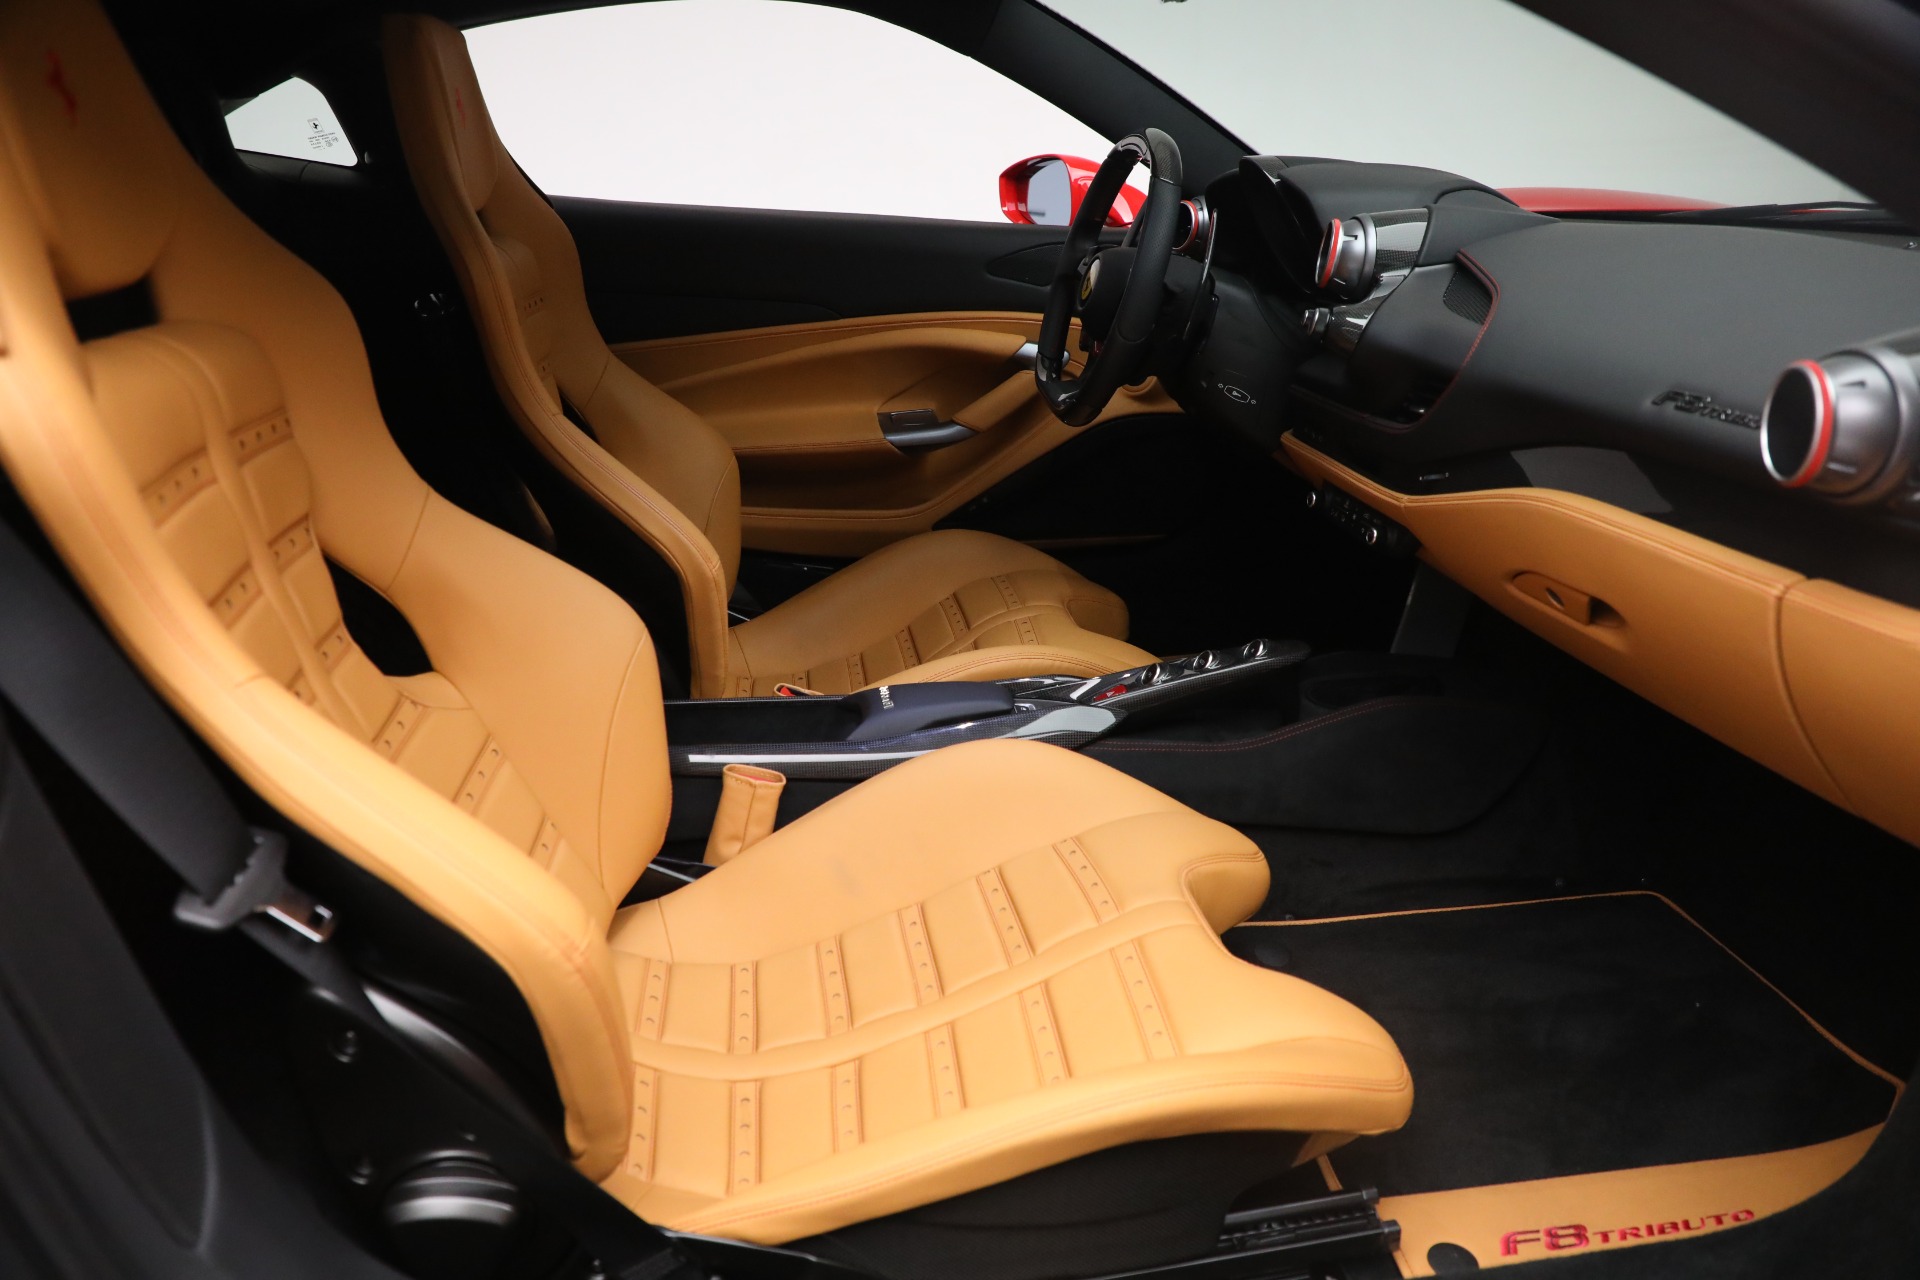 Pagani Automobili Leather key ring with carbon fiber inserts kit